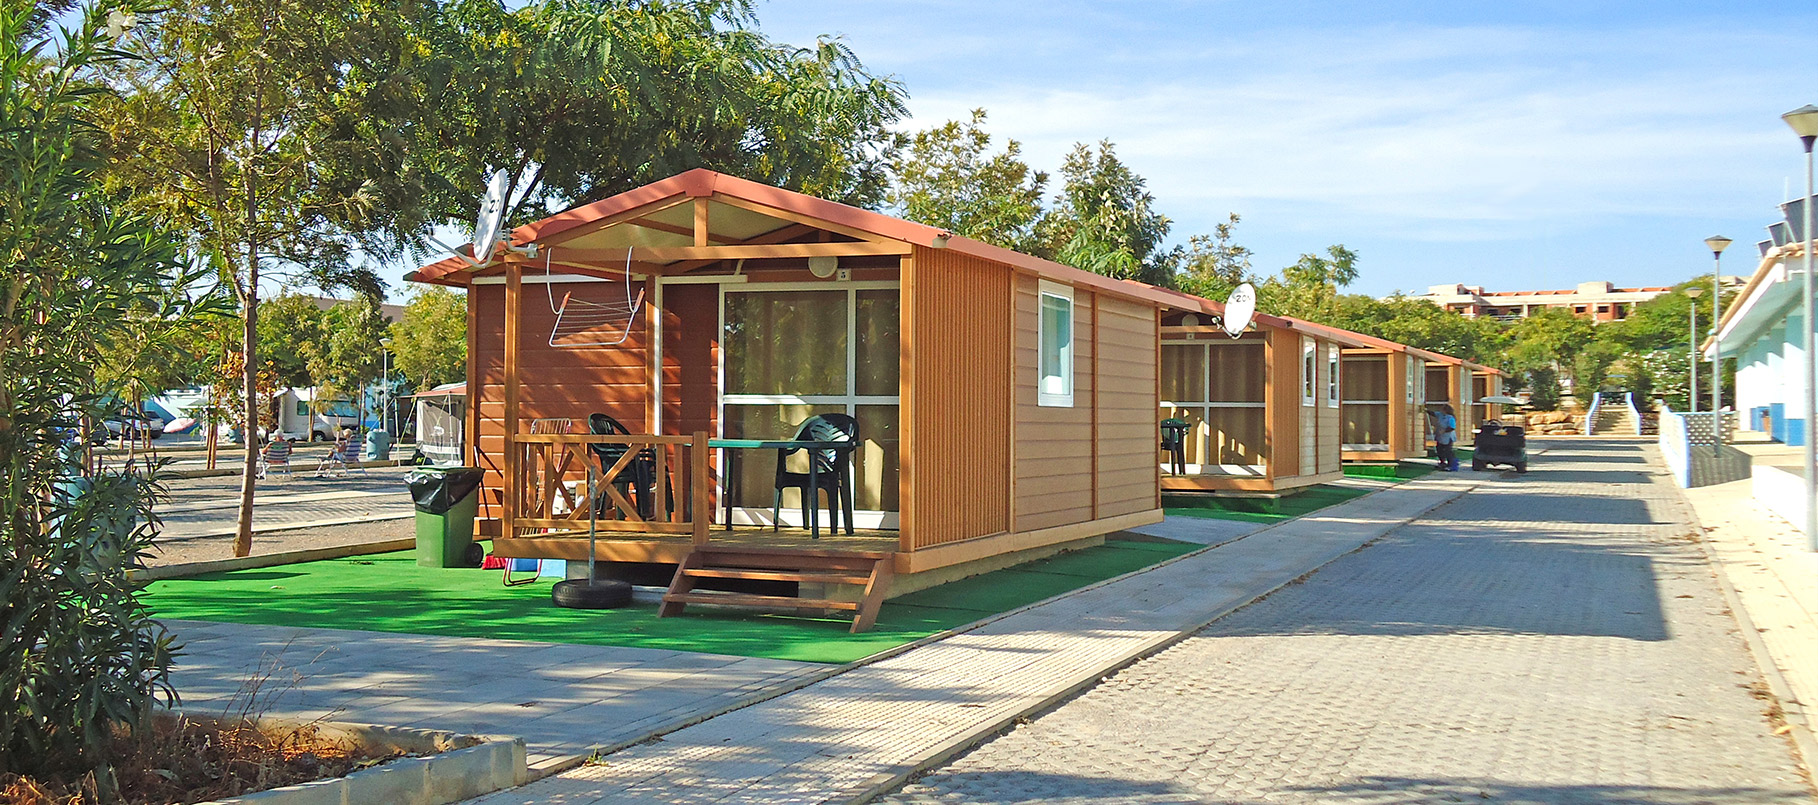 Bungalows for rent in Excellent winter sun campsite in Algarve - Portugal